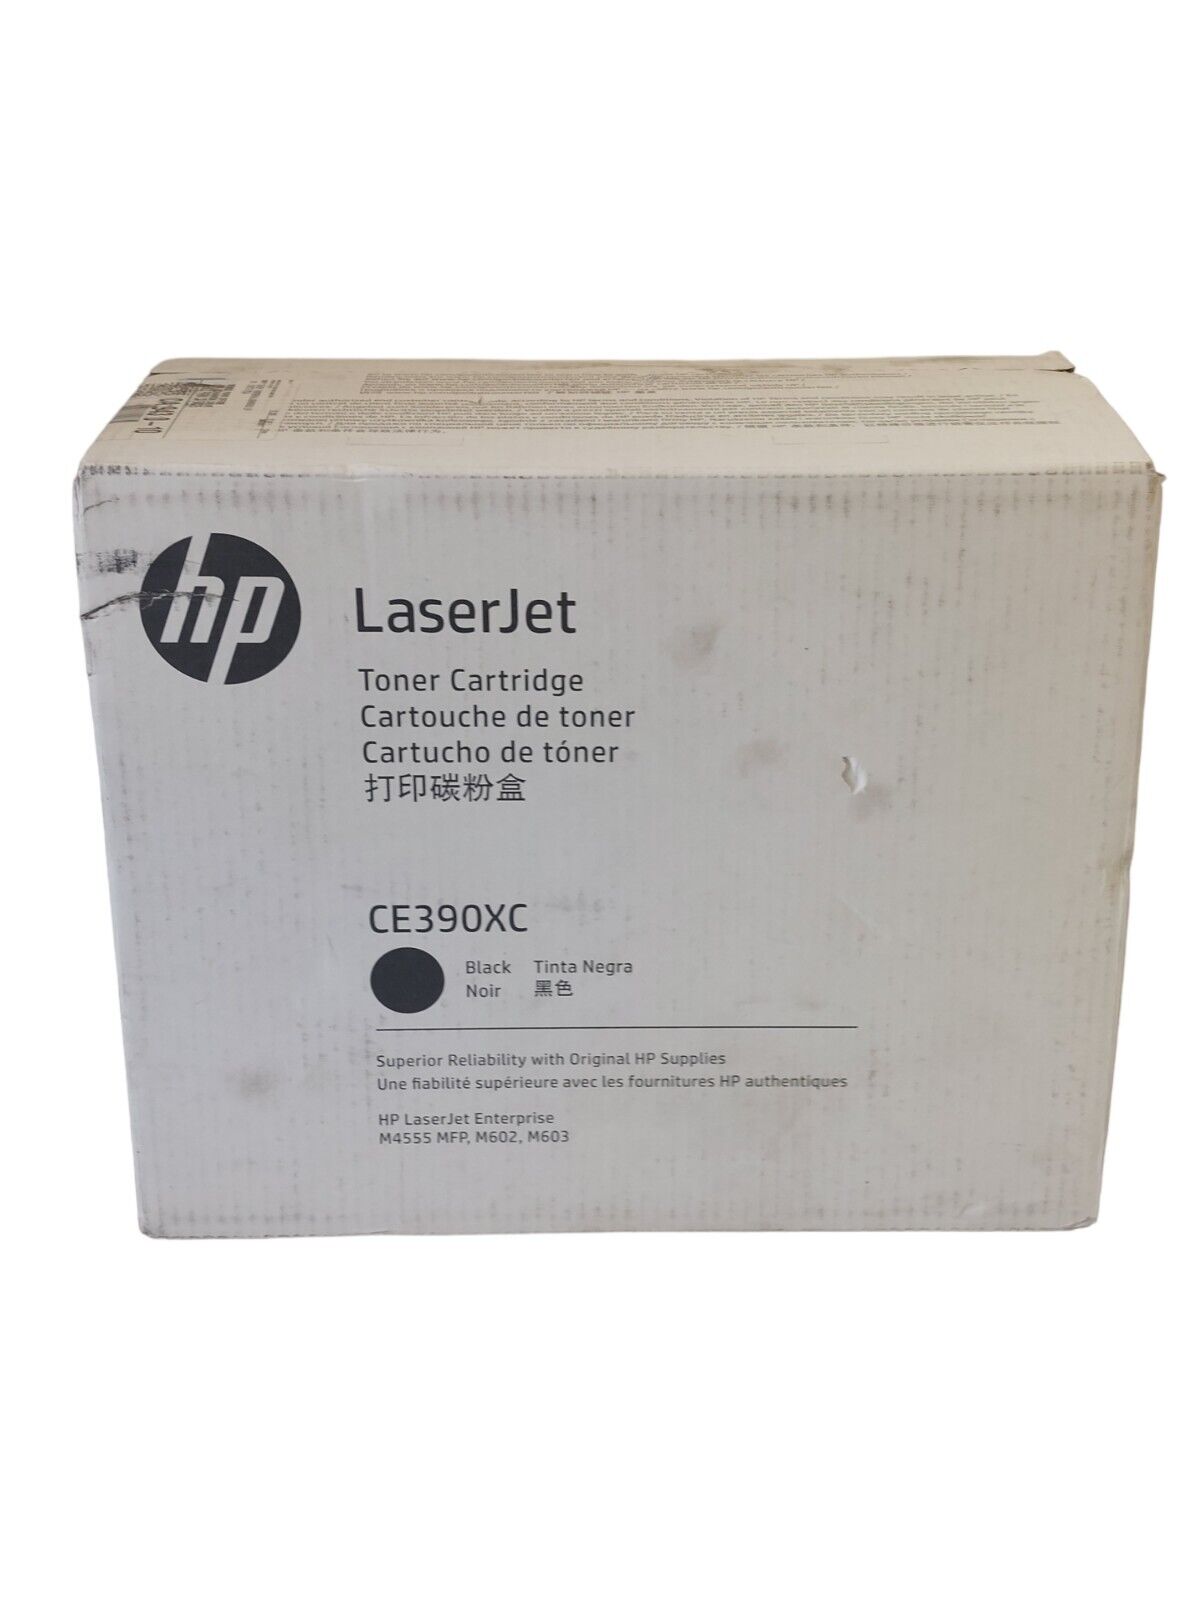 HP CE390XC 90X TONER CARTRIDGE HP LaserJet 600 M602n. Sealed. Genuine